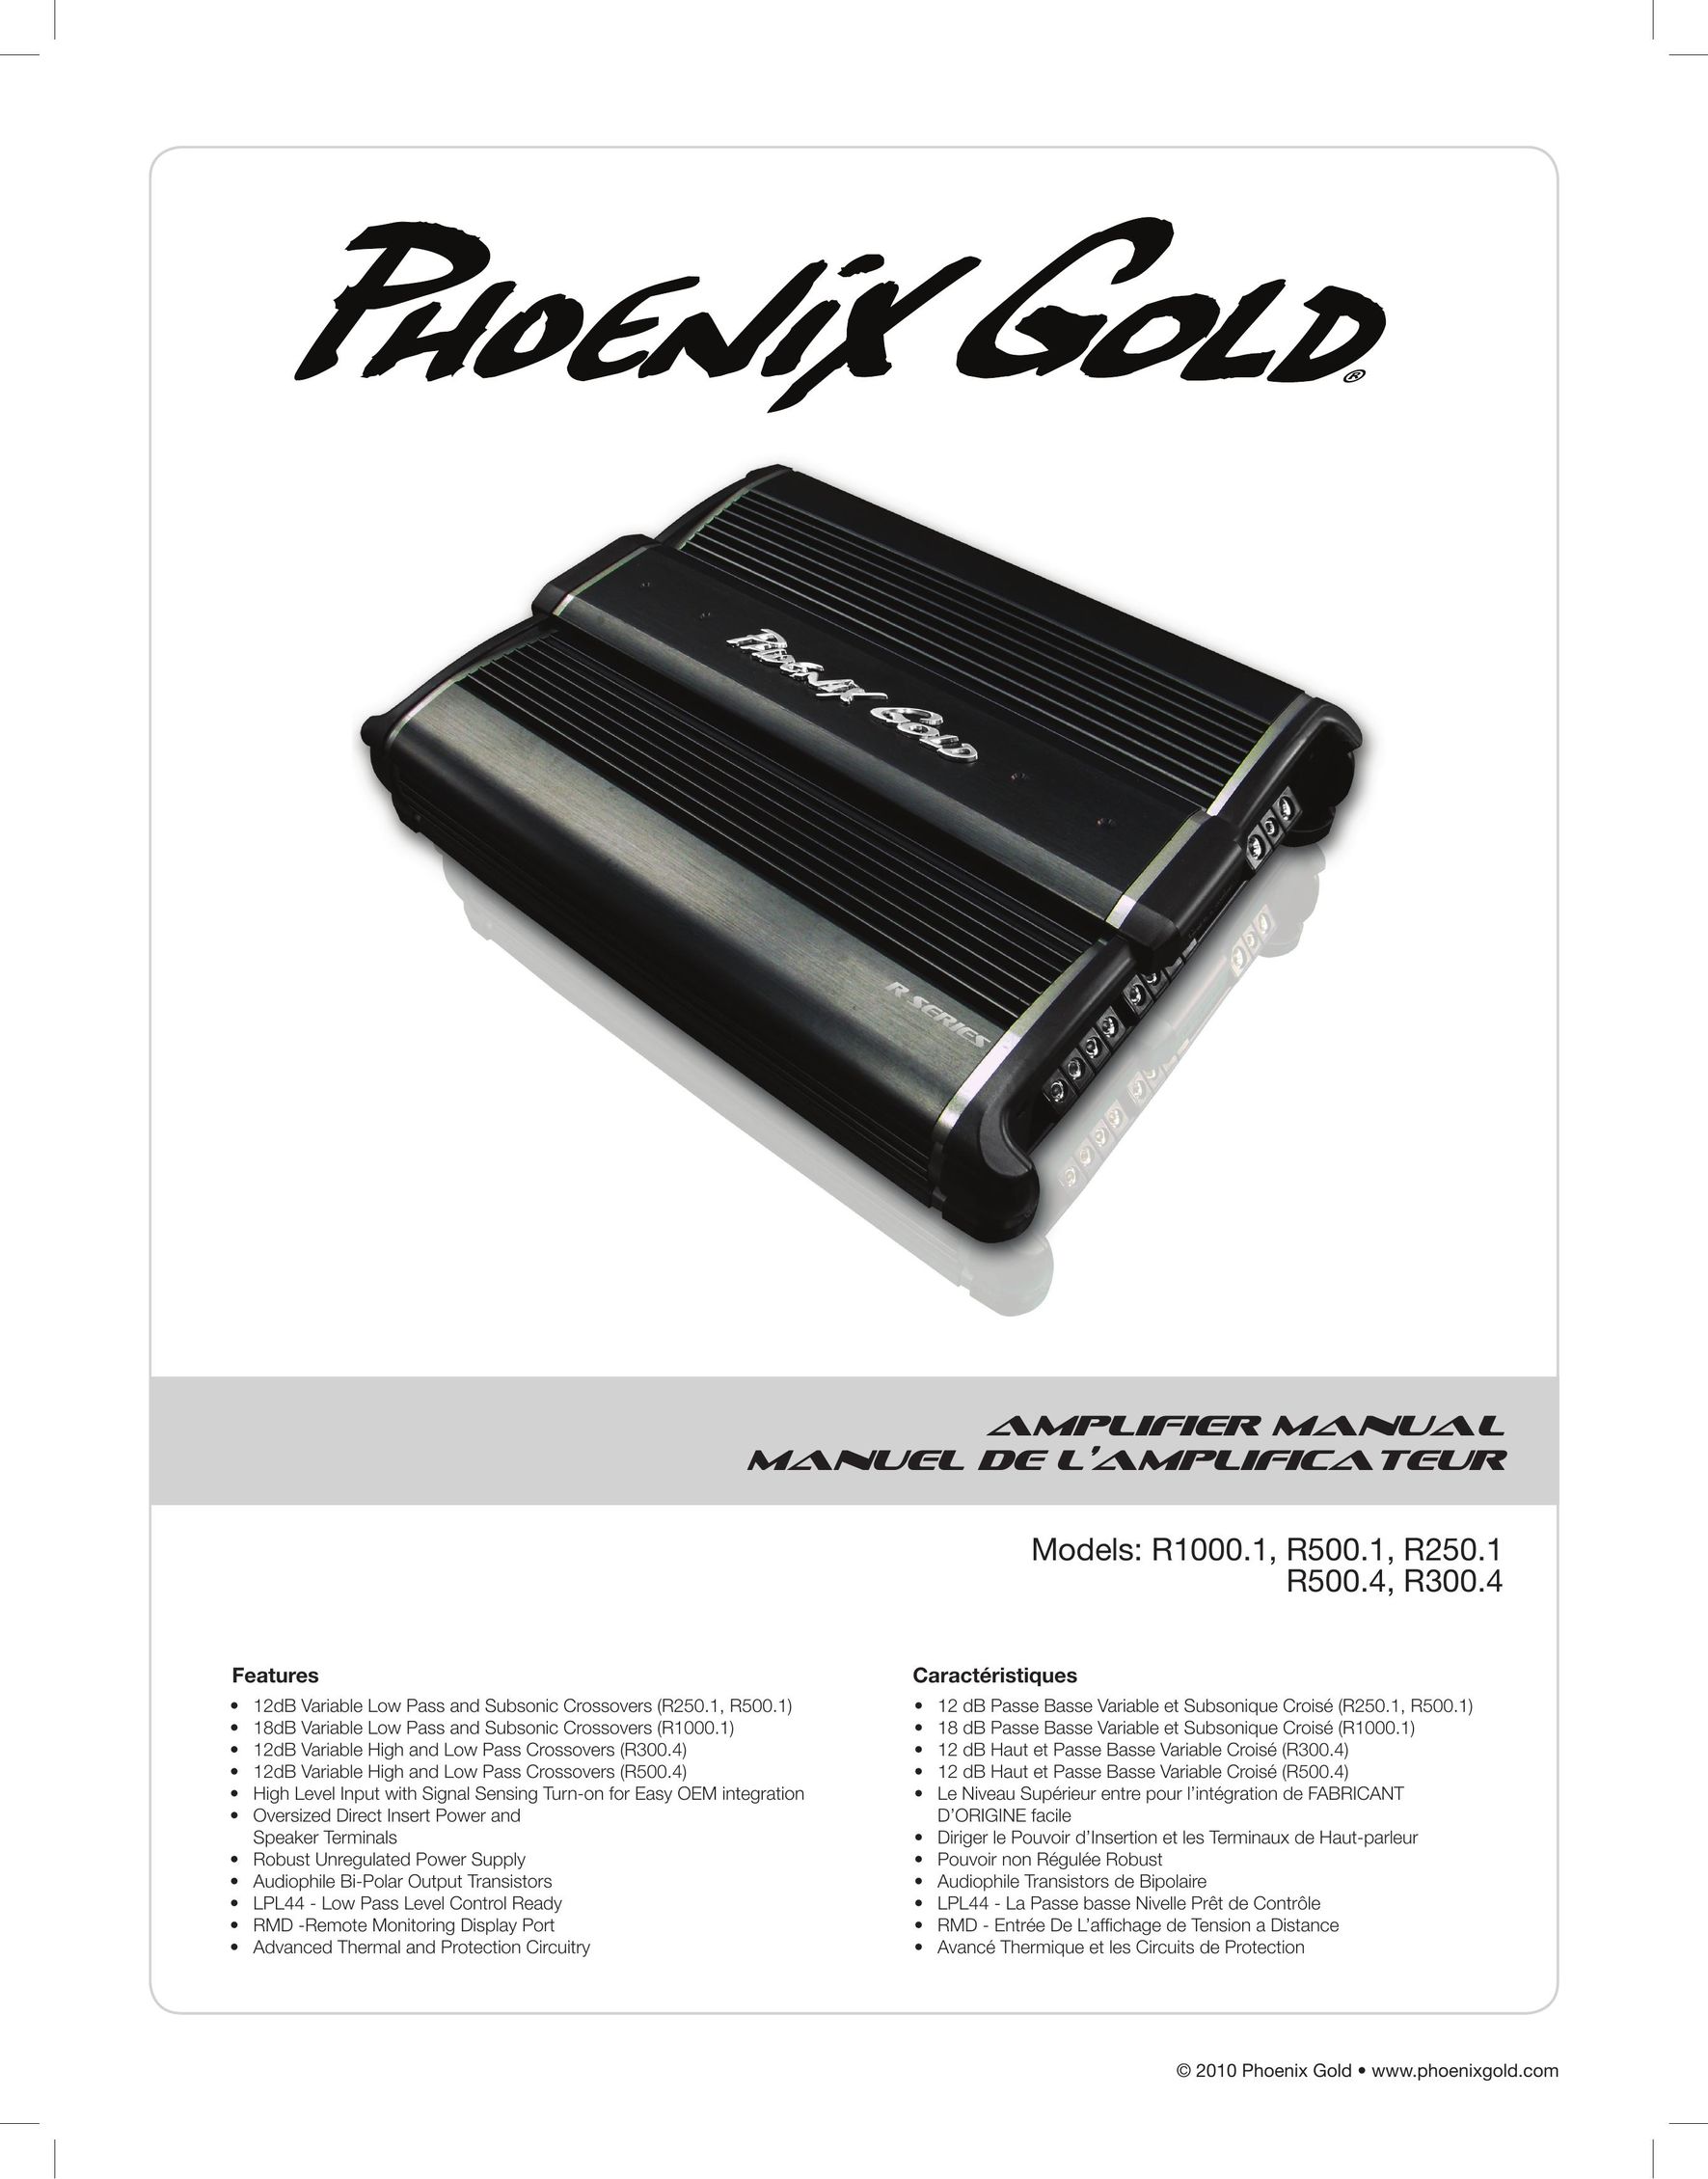 Phoenix Gold R300.4 Car Amplifier User Manual